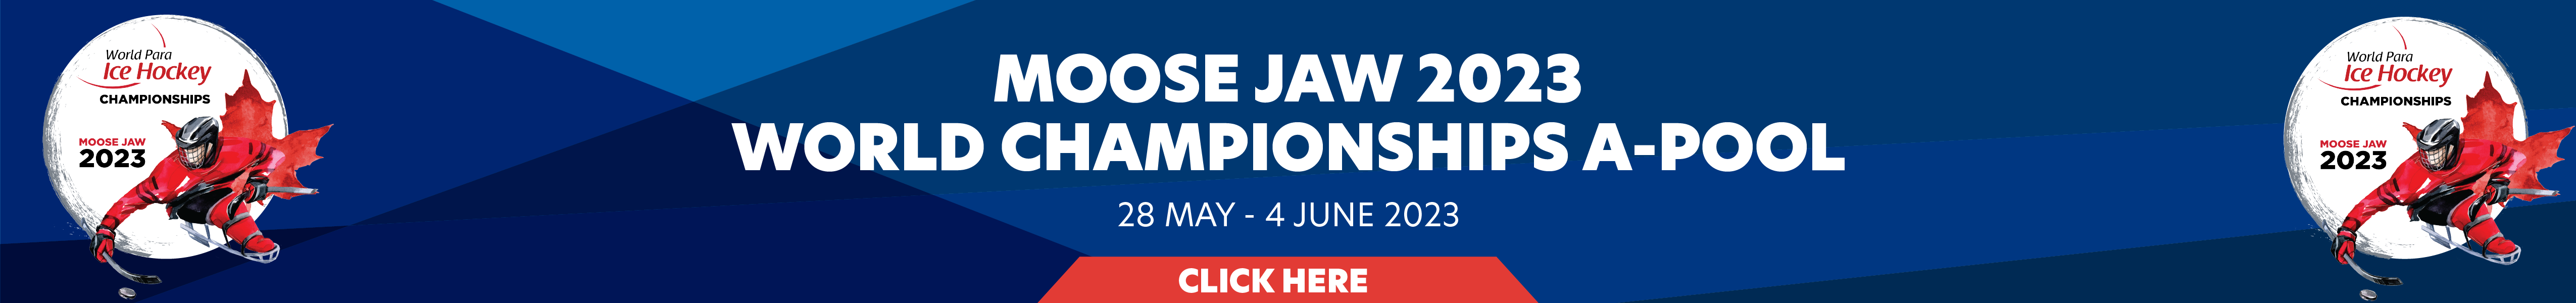 Moose Jaw 2023 World Championships A-Pool 